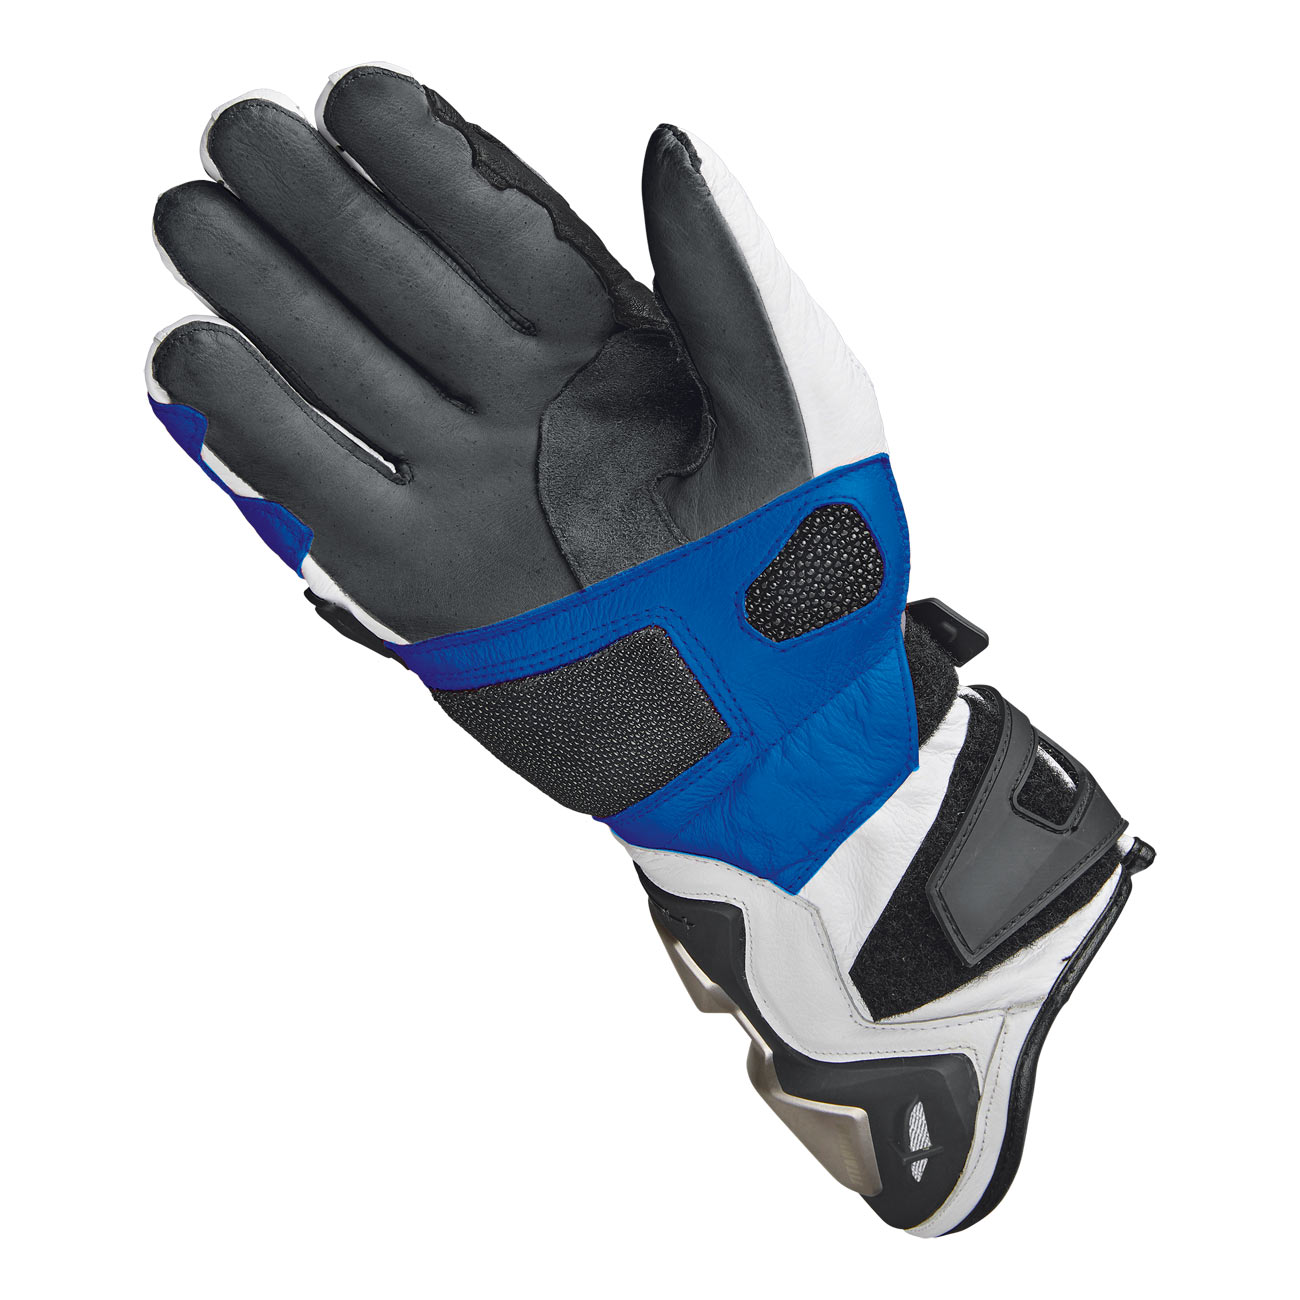 Titan RR Sports glove